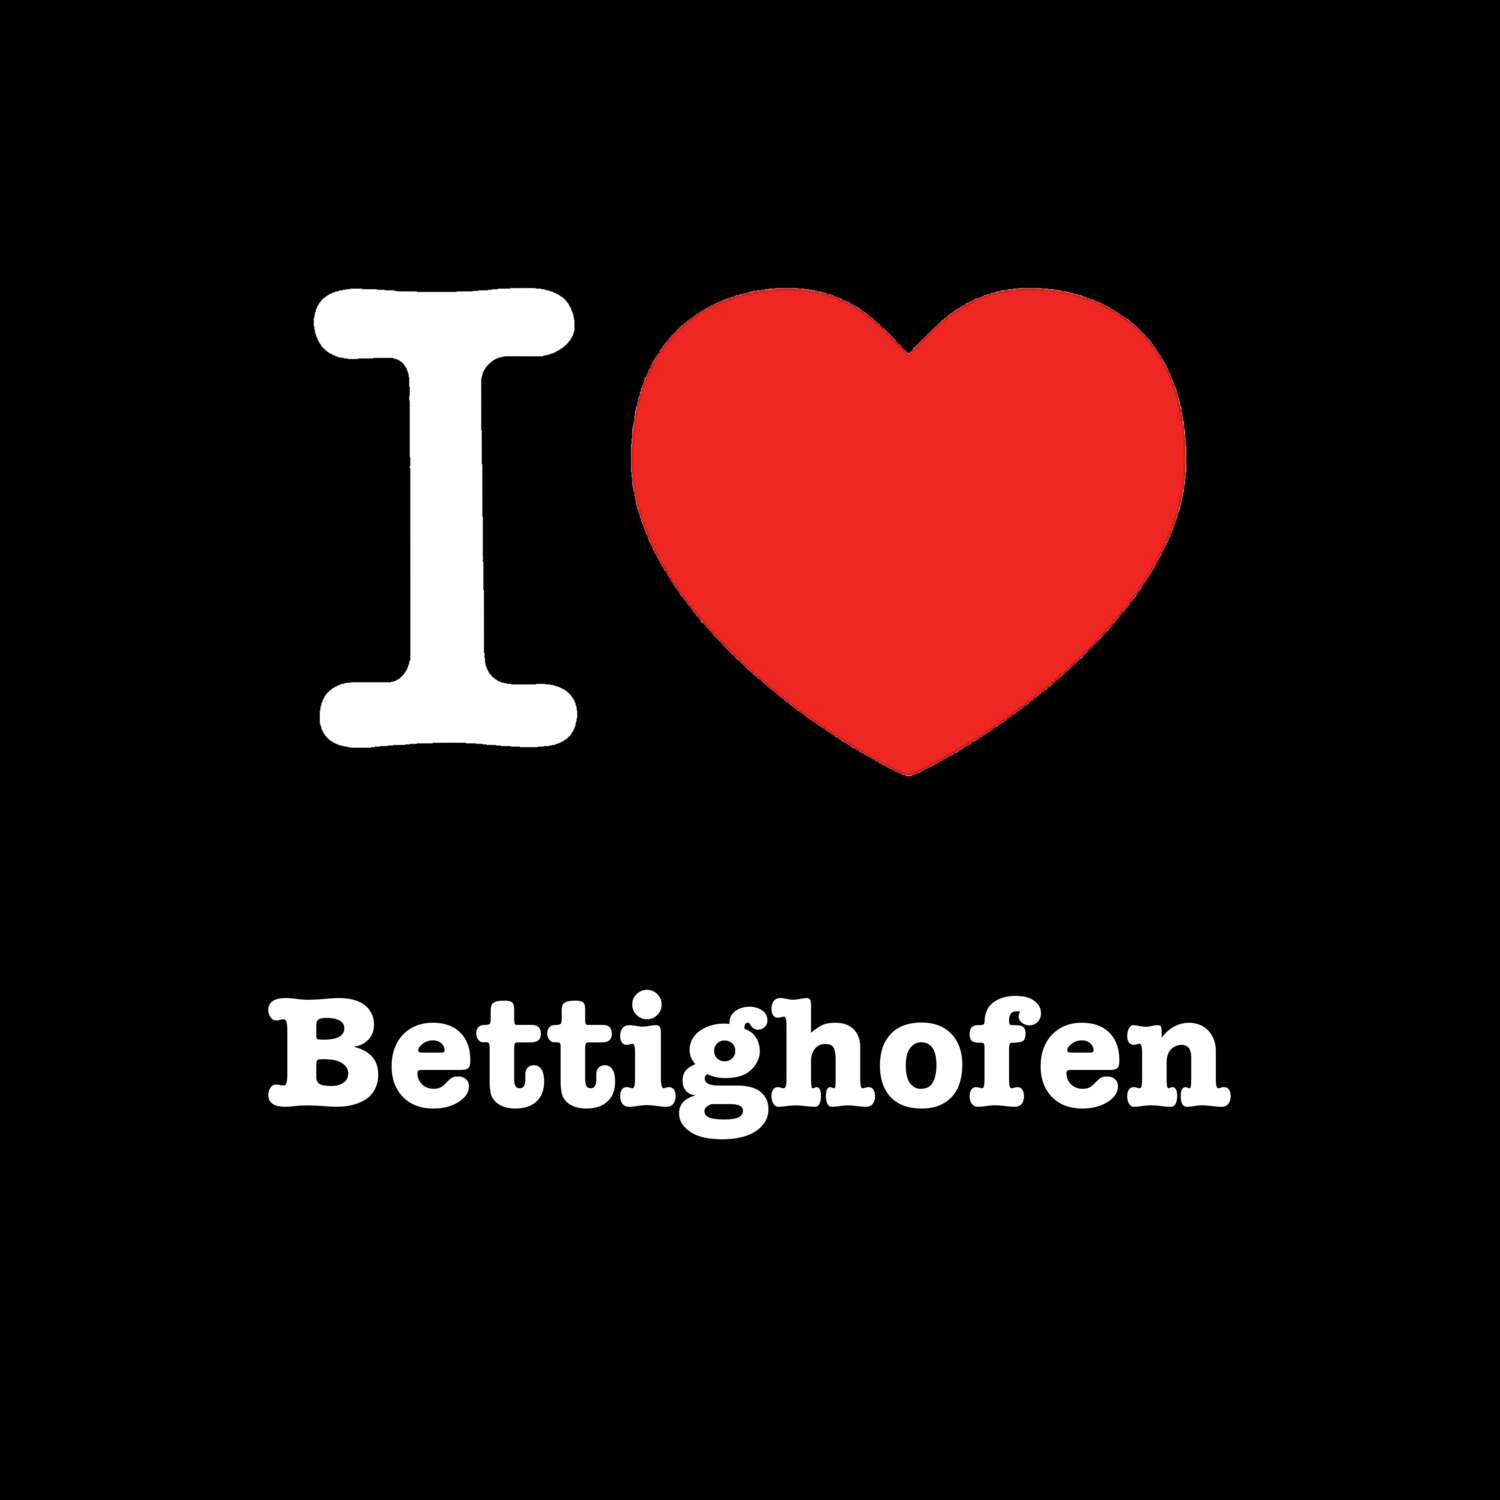 Bettighofen T-Shirt »I love«